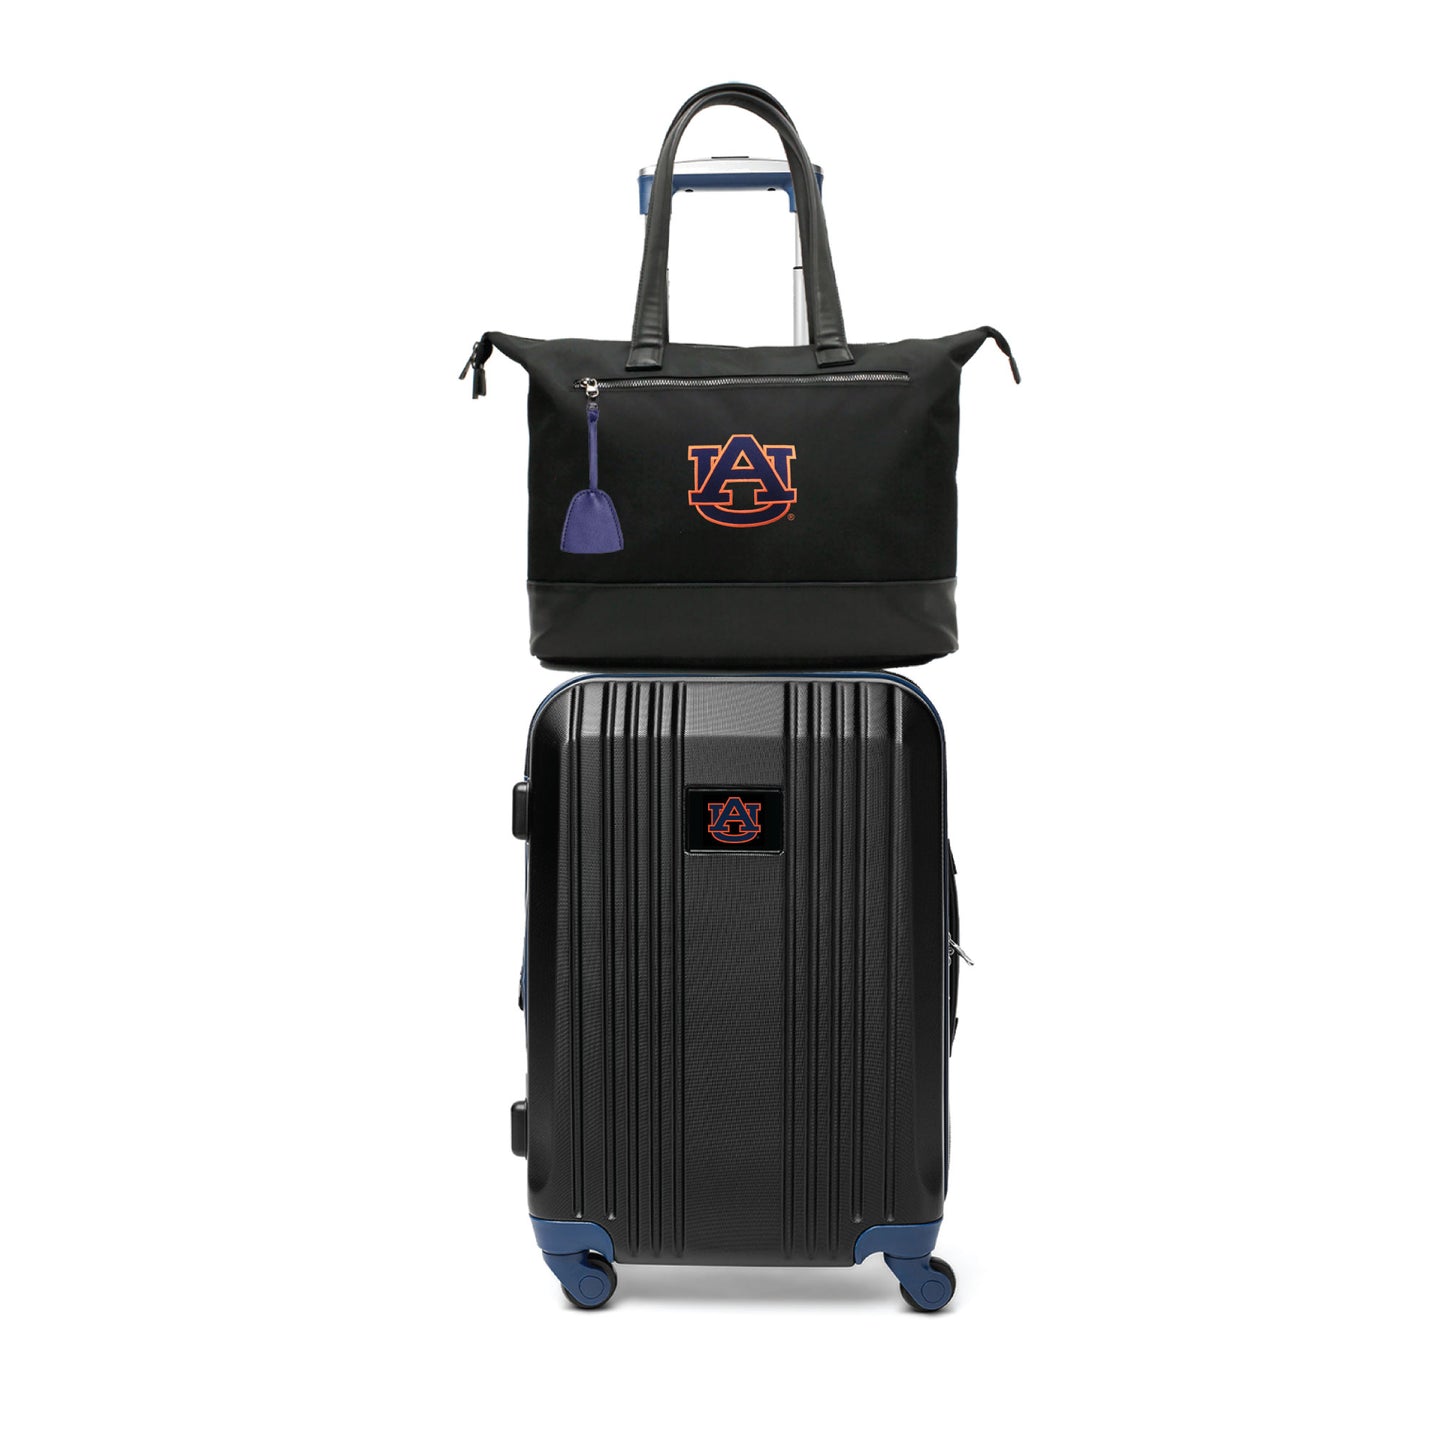 Auburn Tigers Premium Laptop Tote Bag and Luggage Set